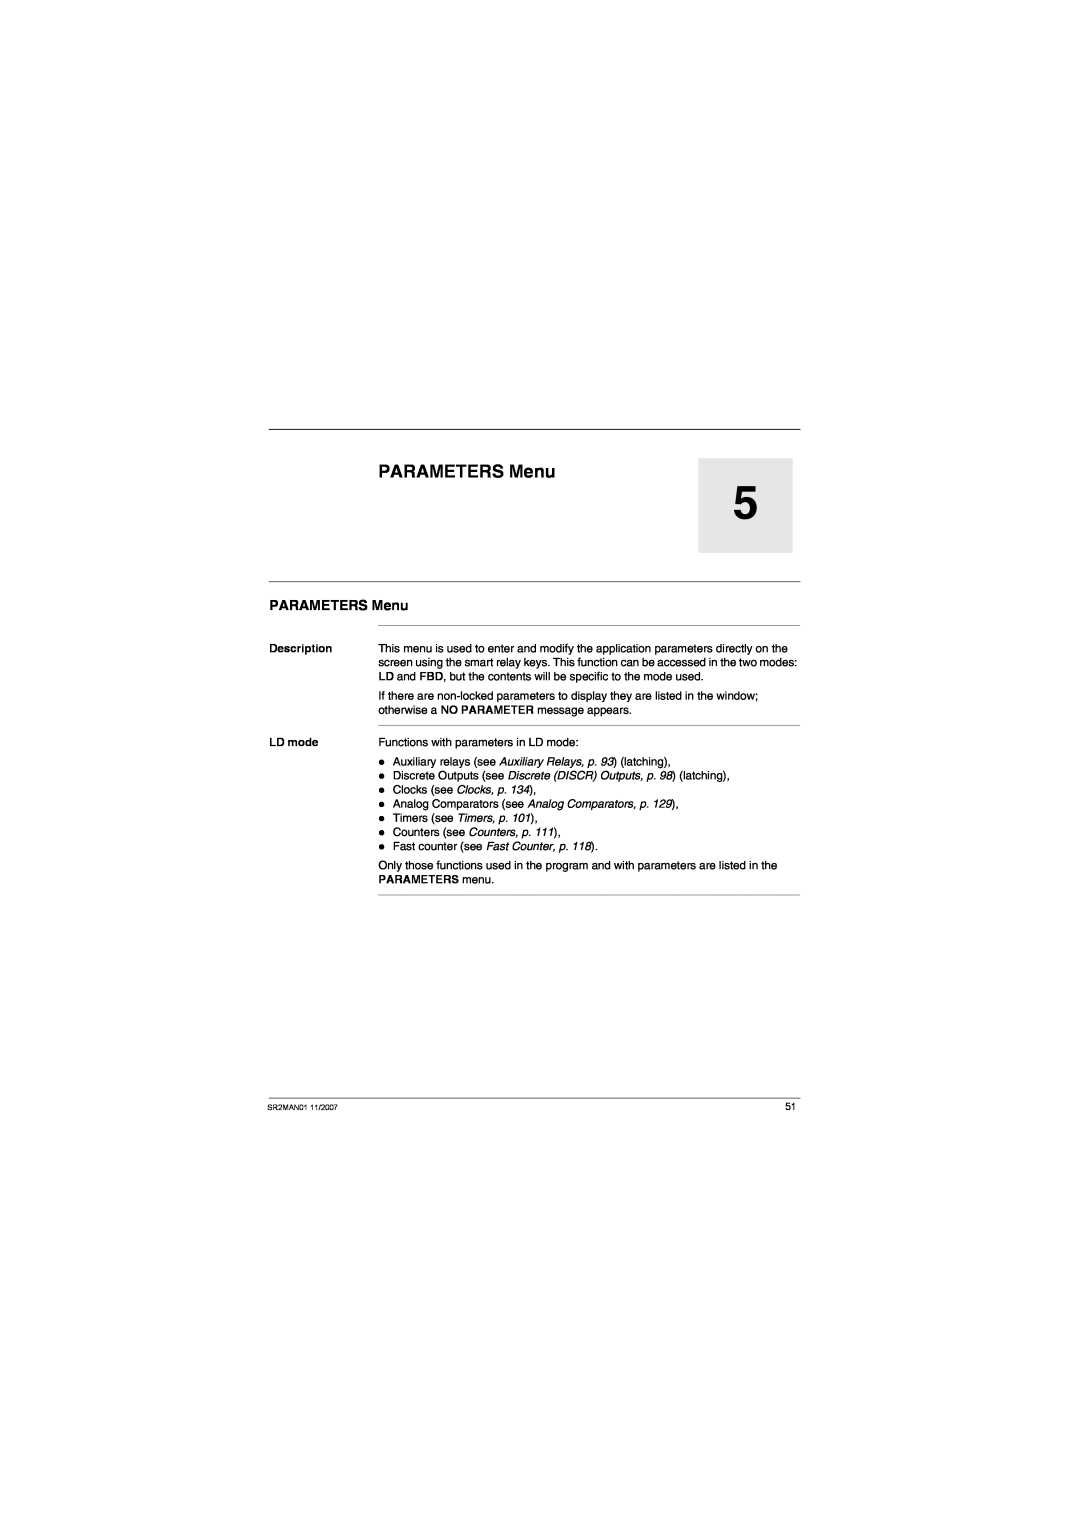 Schneider Electric SR2MAN01 user manual PARAMETERS Menu, Description, LD mode, PARAMETERS menu 